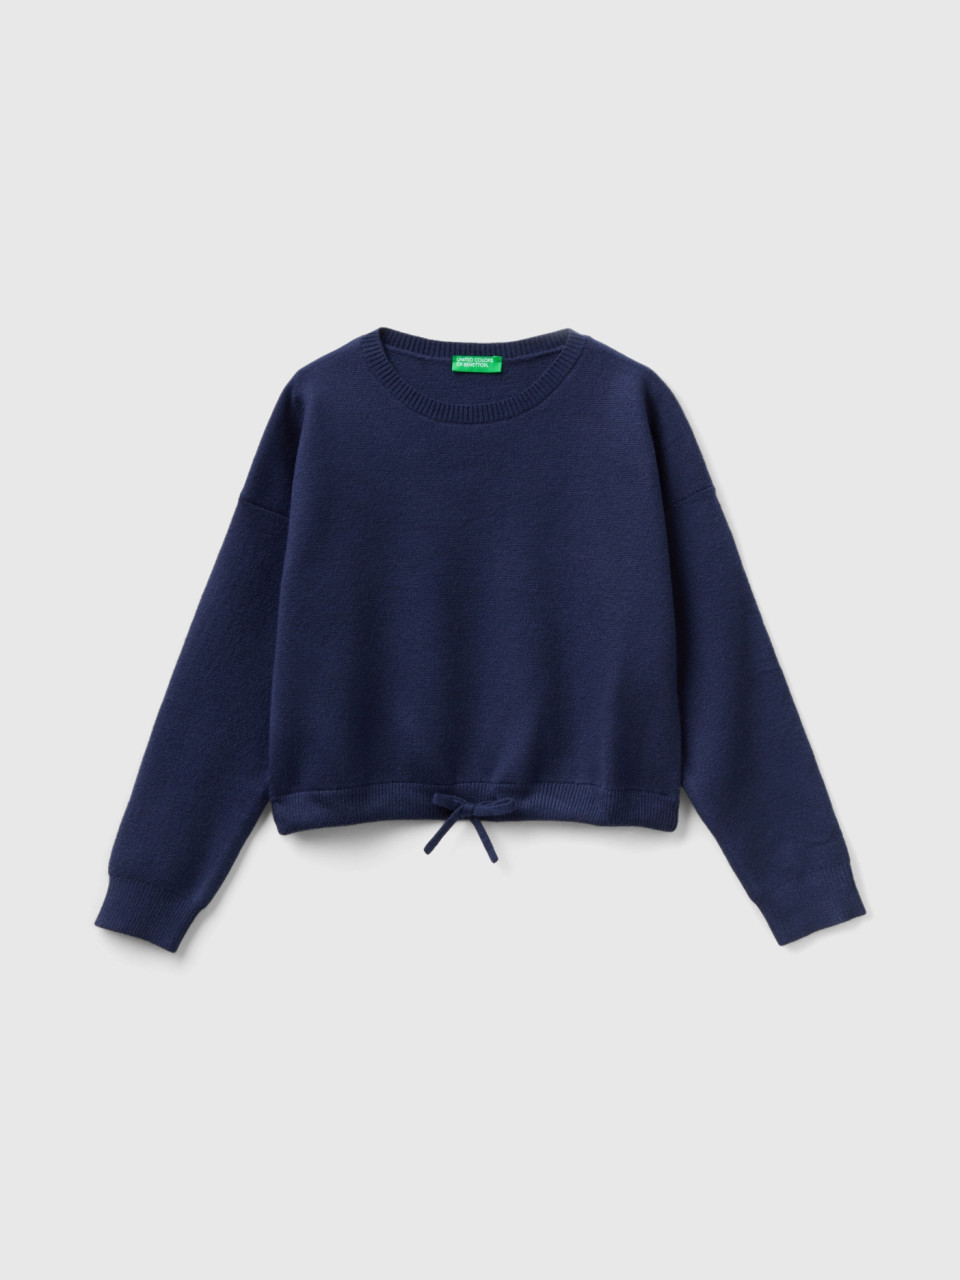 Benetton, Sweater With Drawstring, Dark Blue, Kids